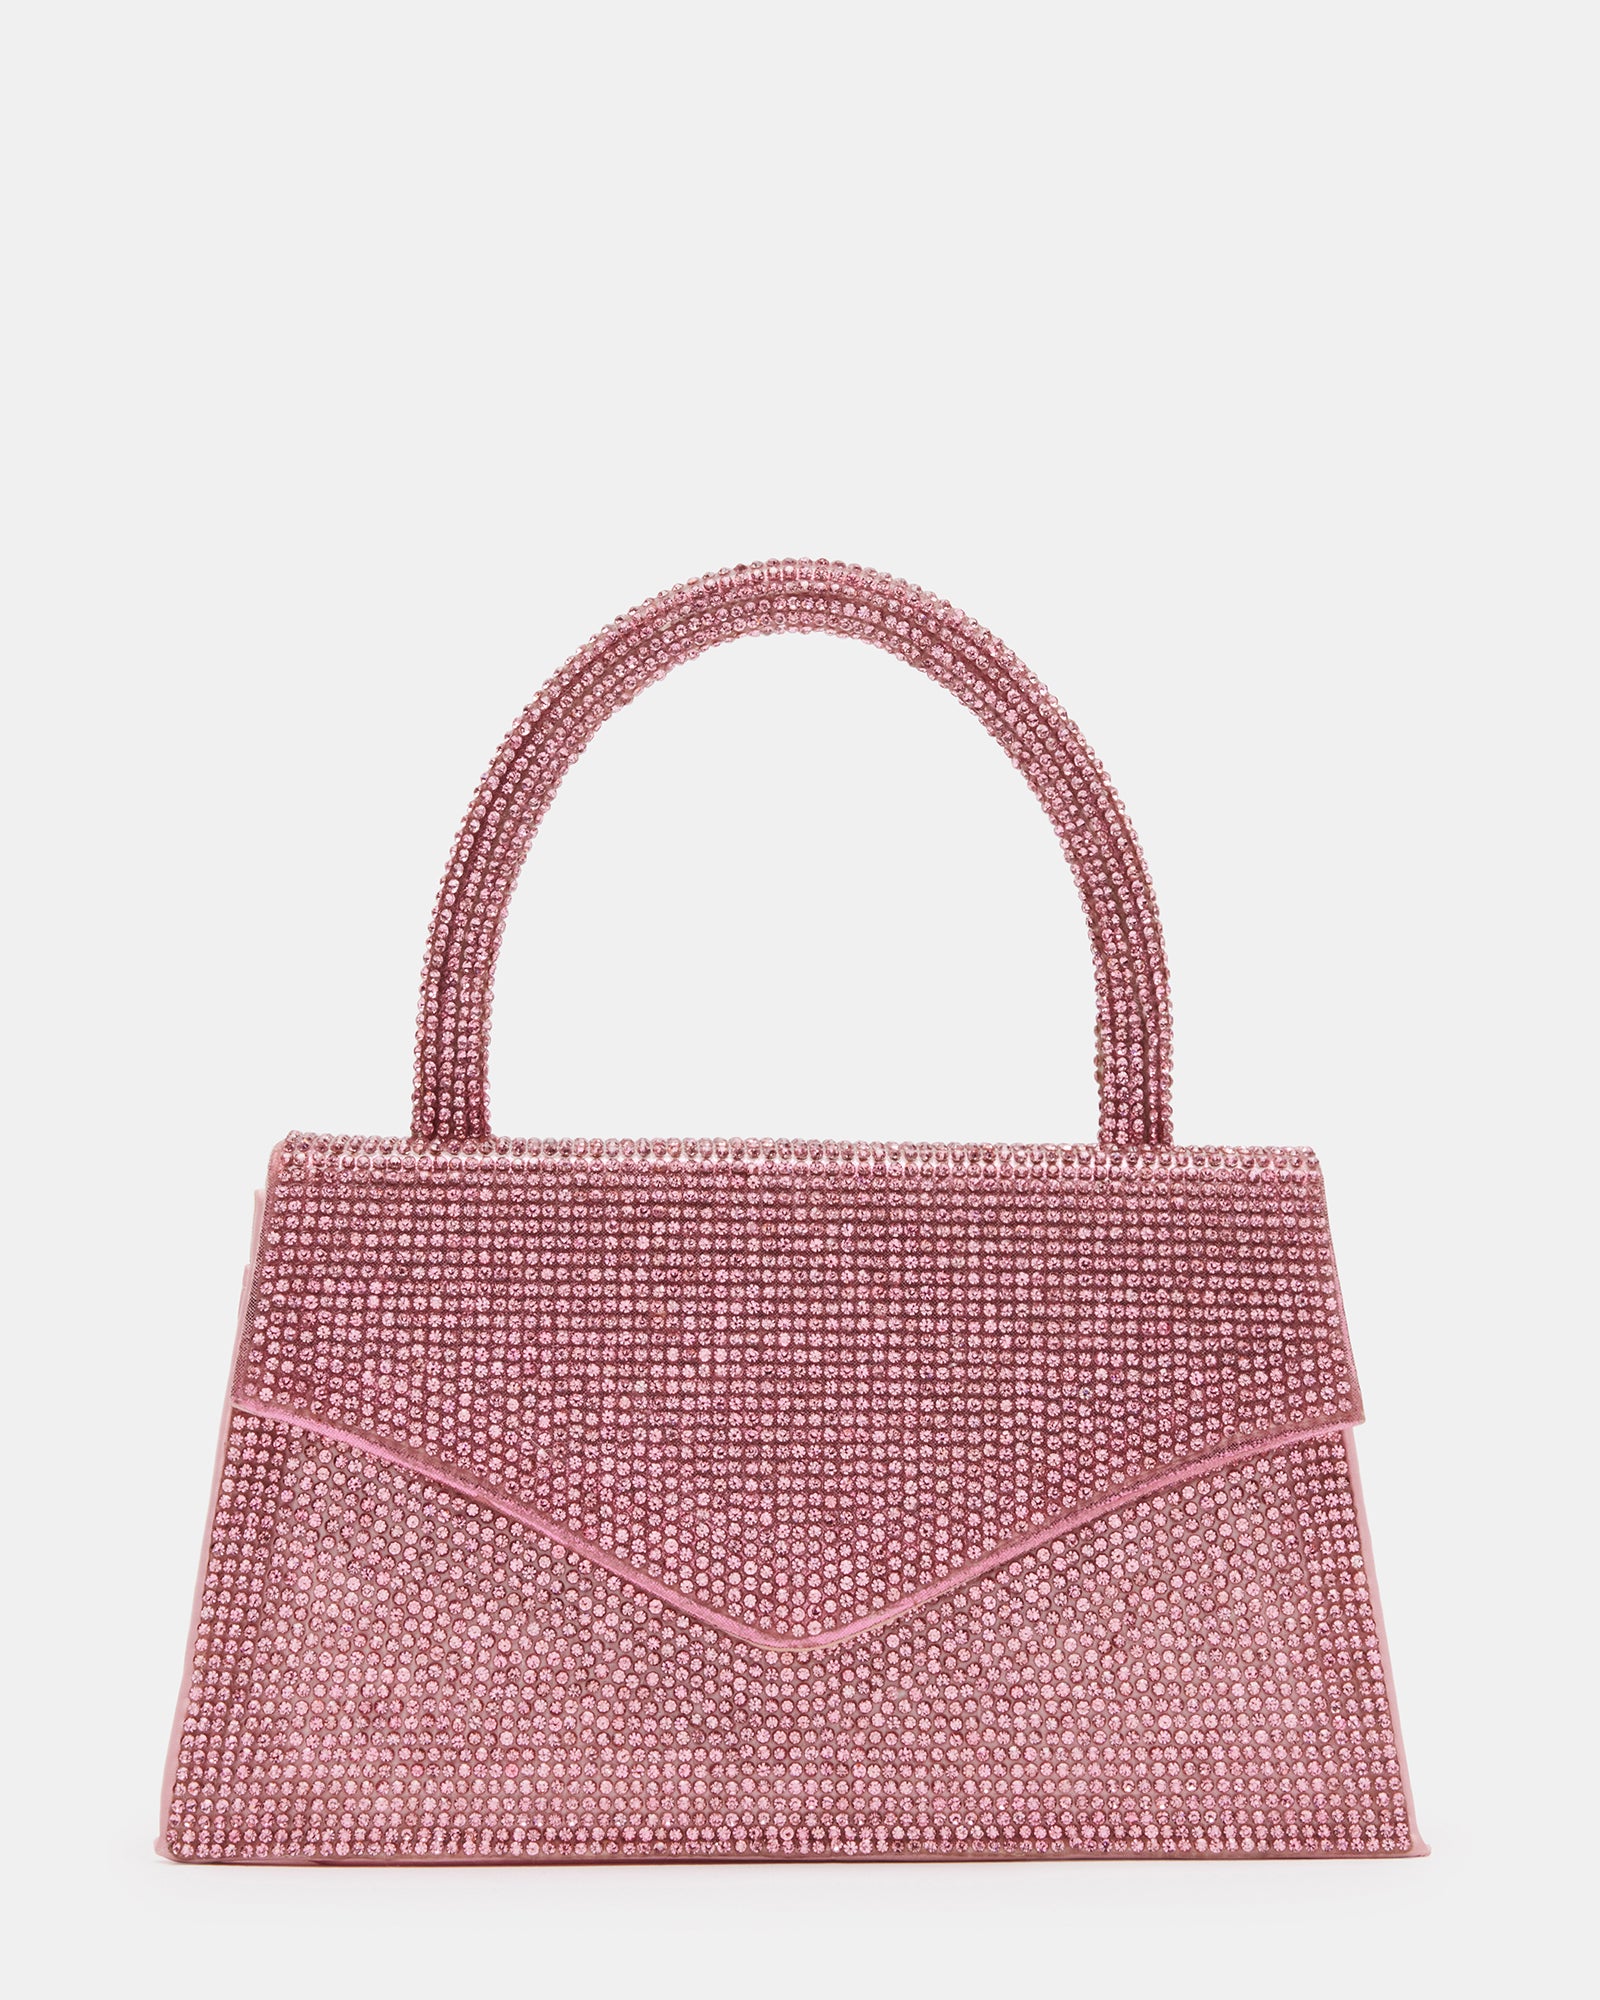 Steve Madden Blannis Crossbody Bag in Pink